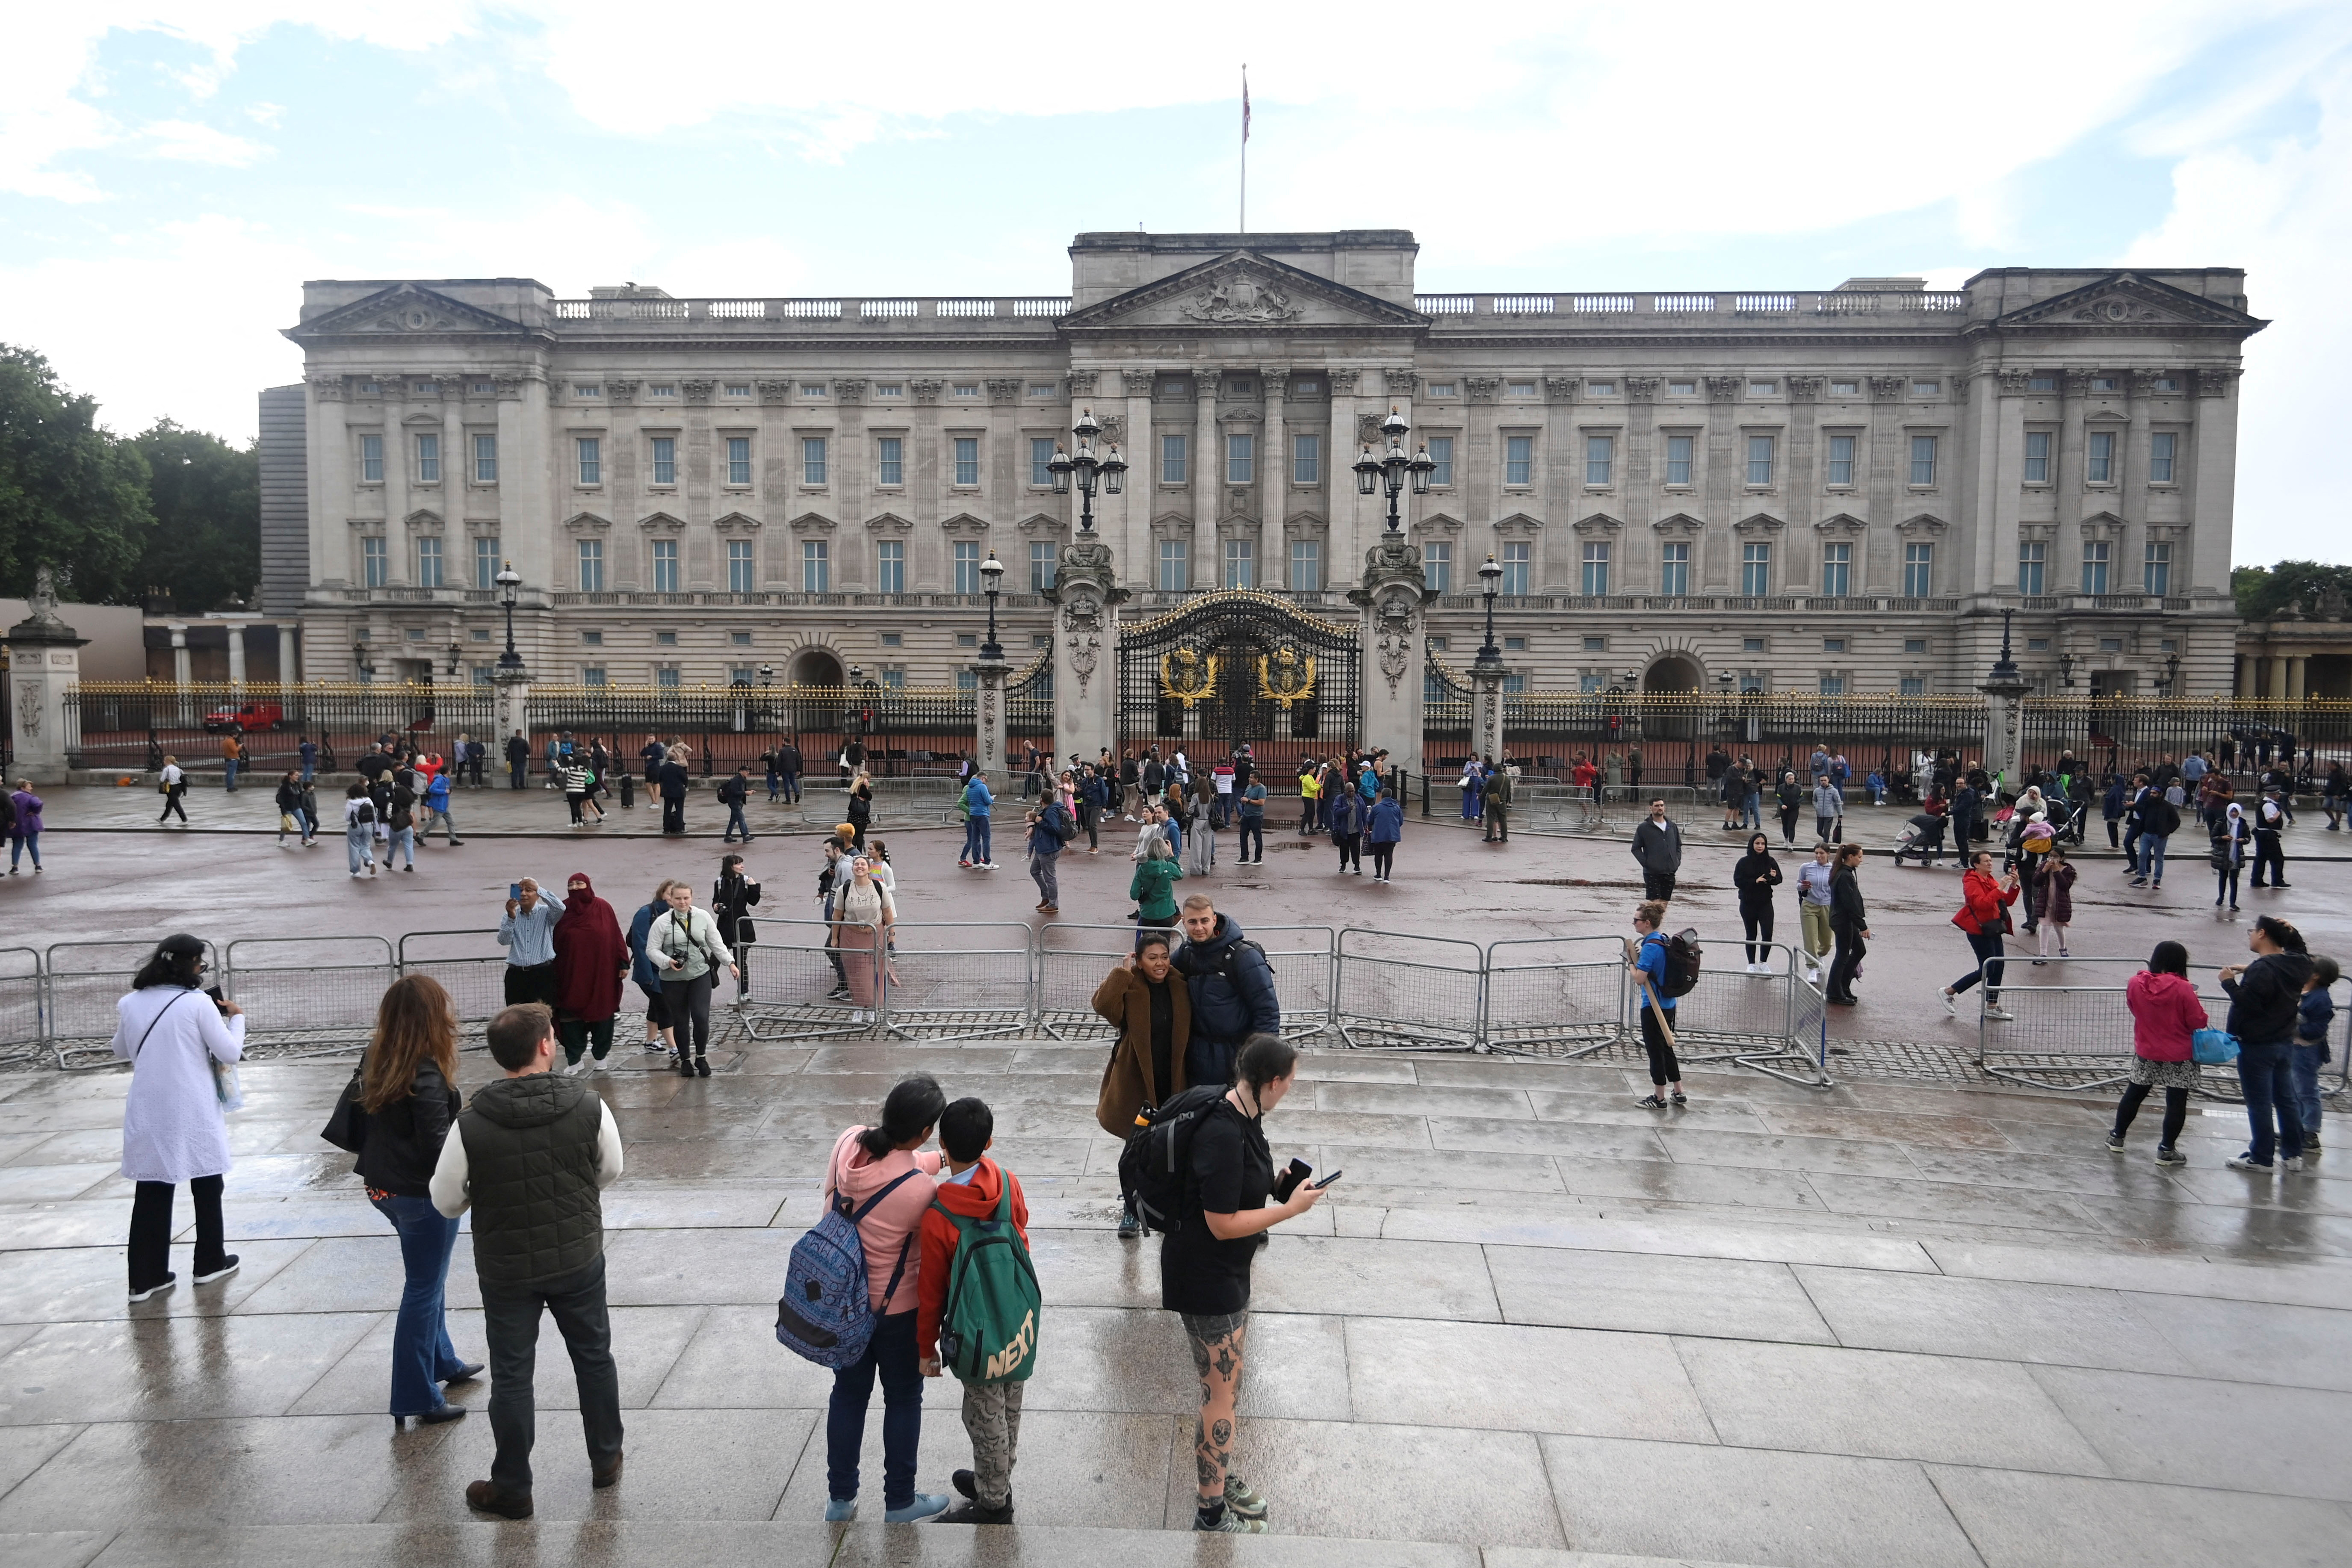 People gather outside Buckingham Palace in London